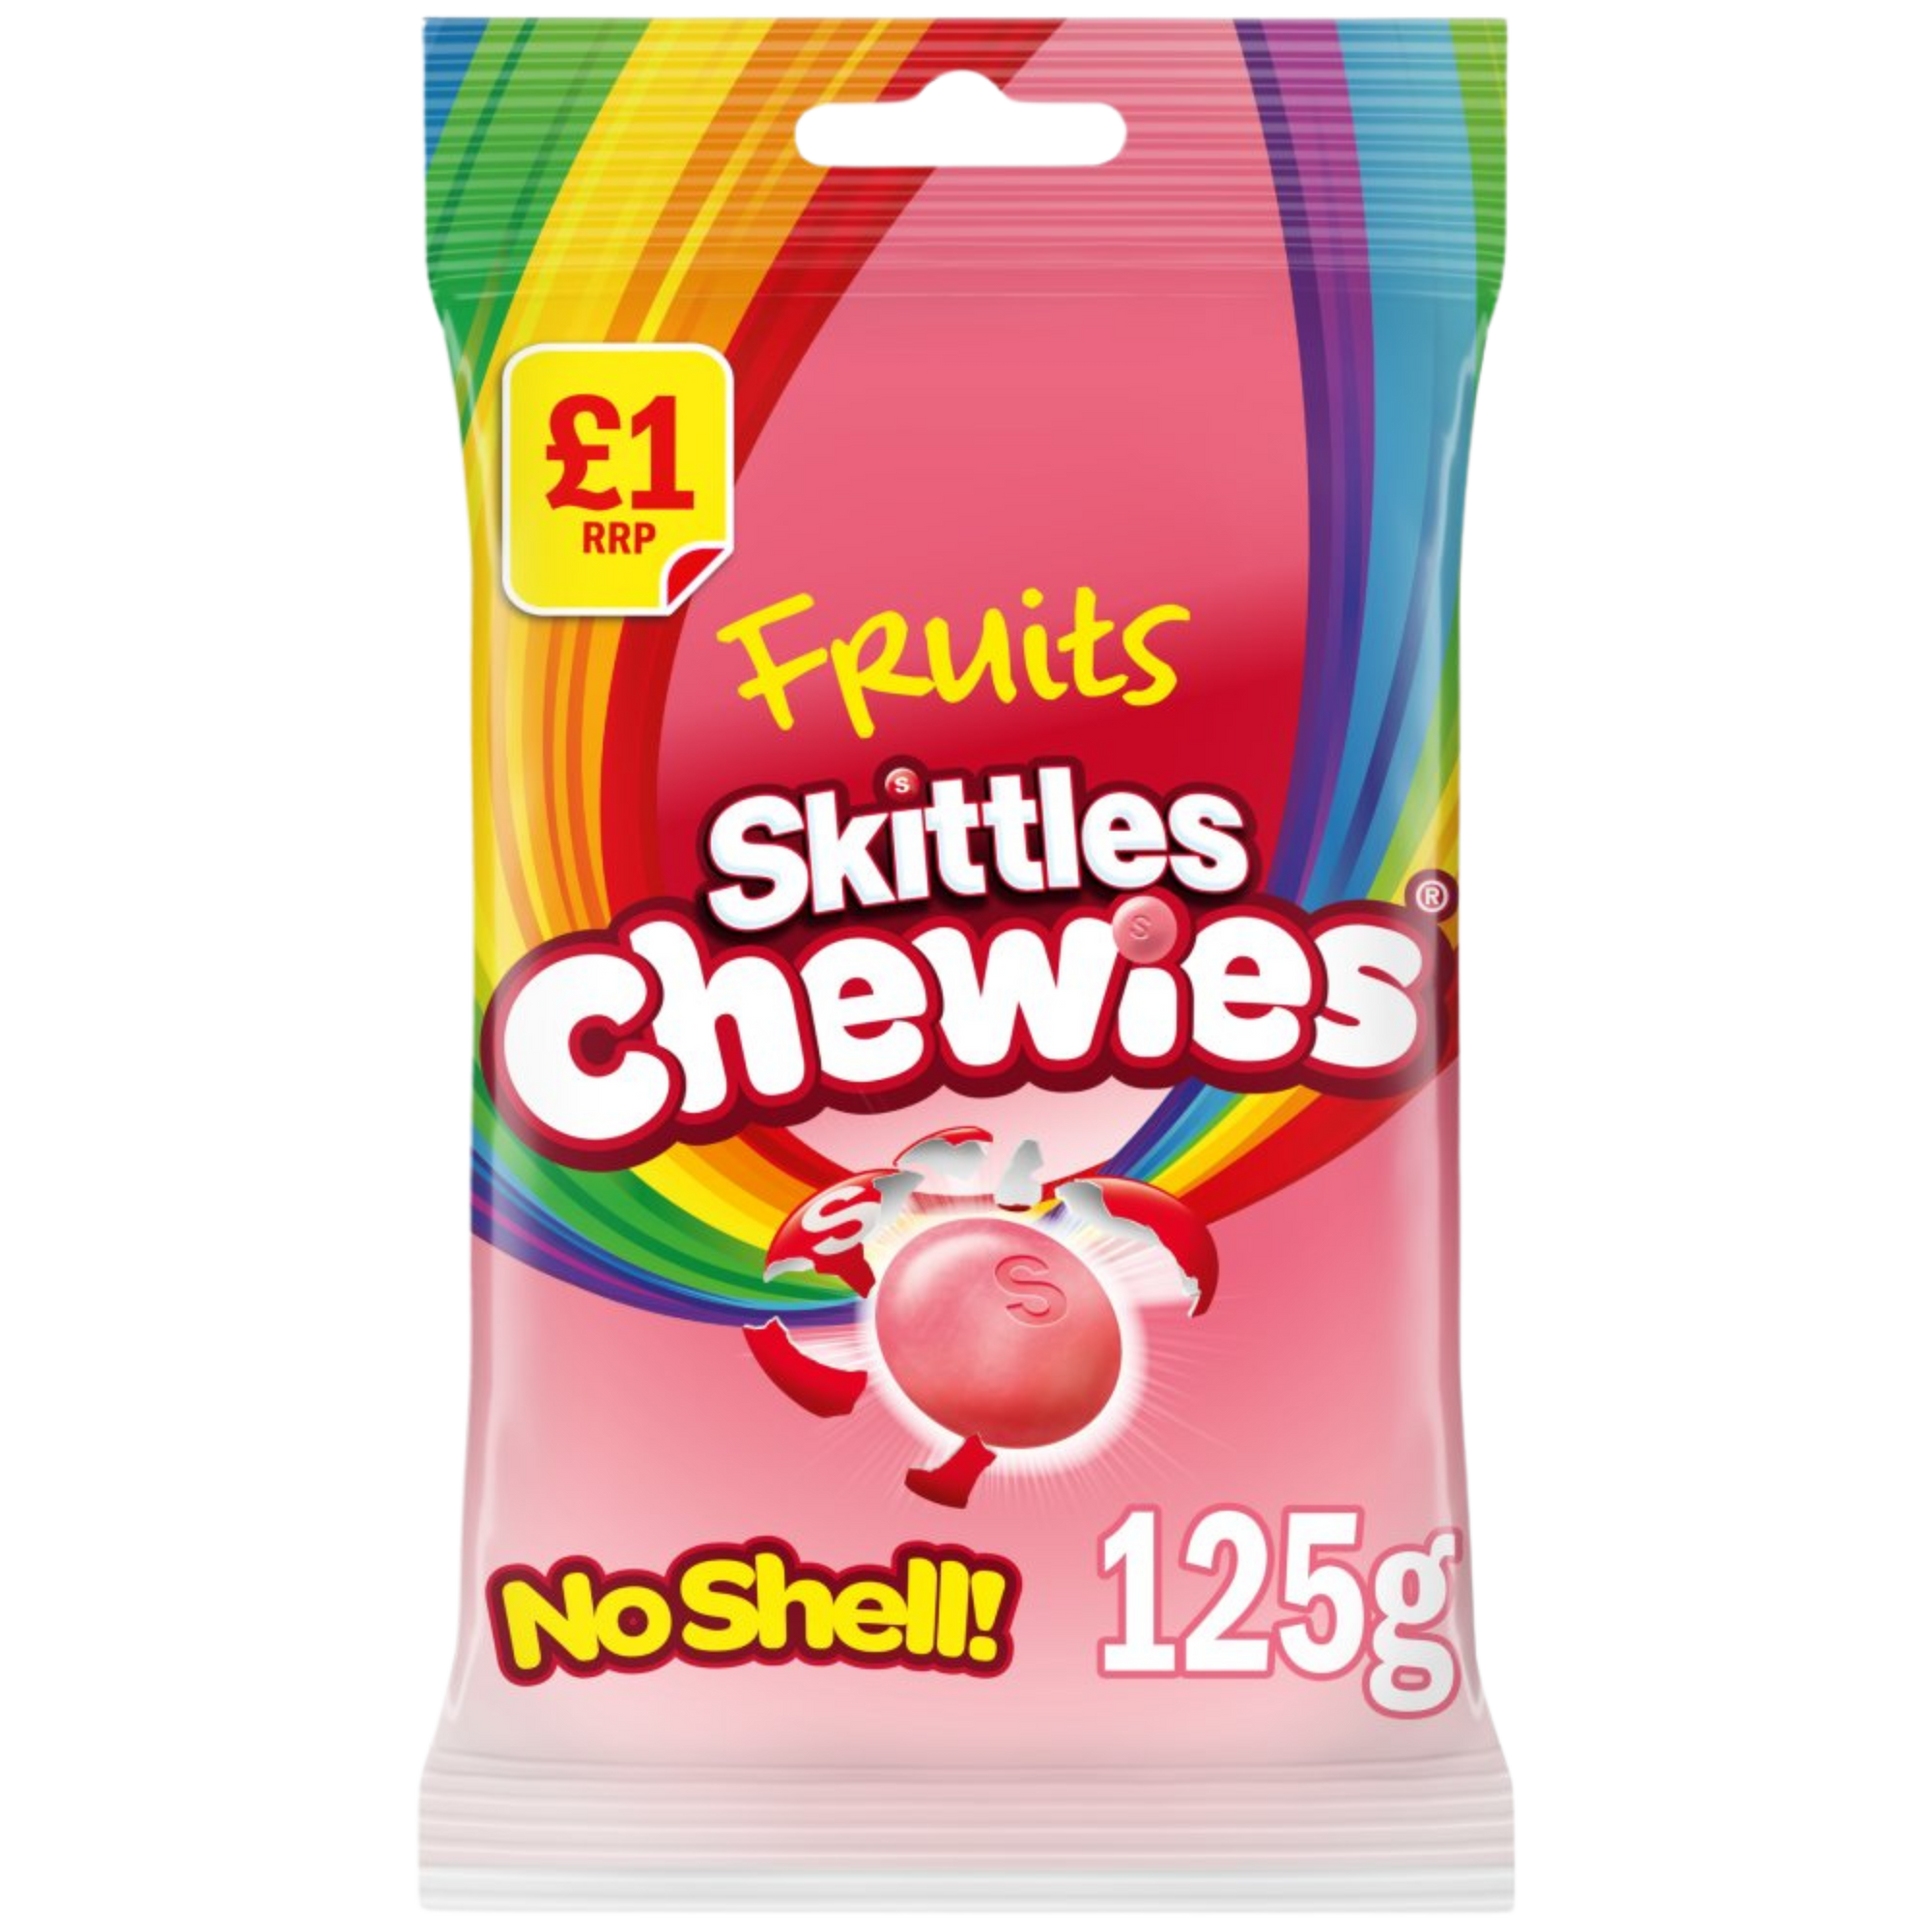 Skittles Chewies Vegan Sweets Fruit Treat Bag 125g - Nammi.net